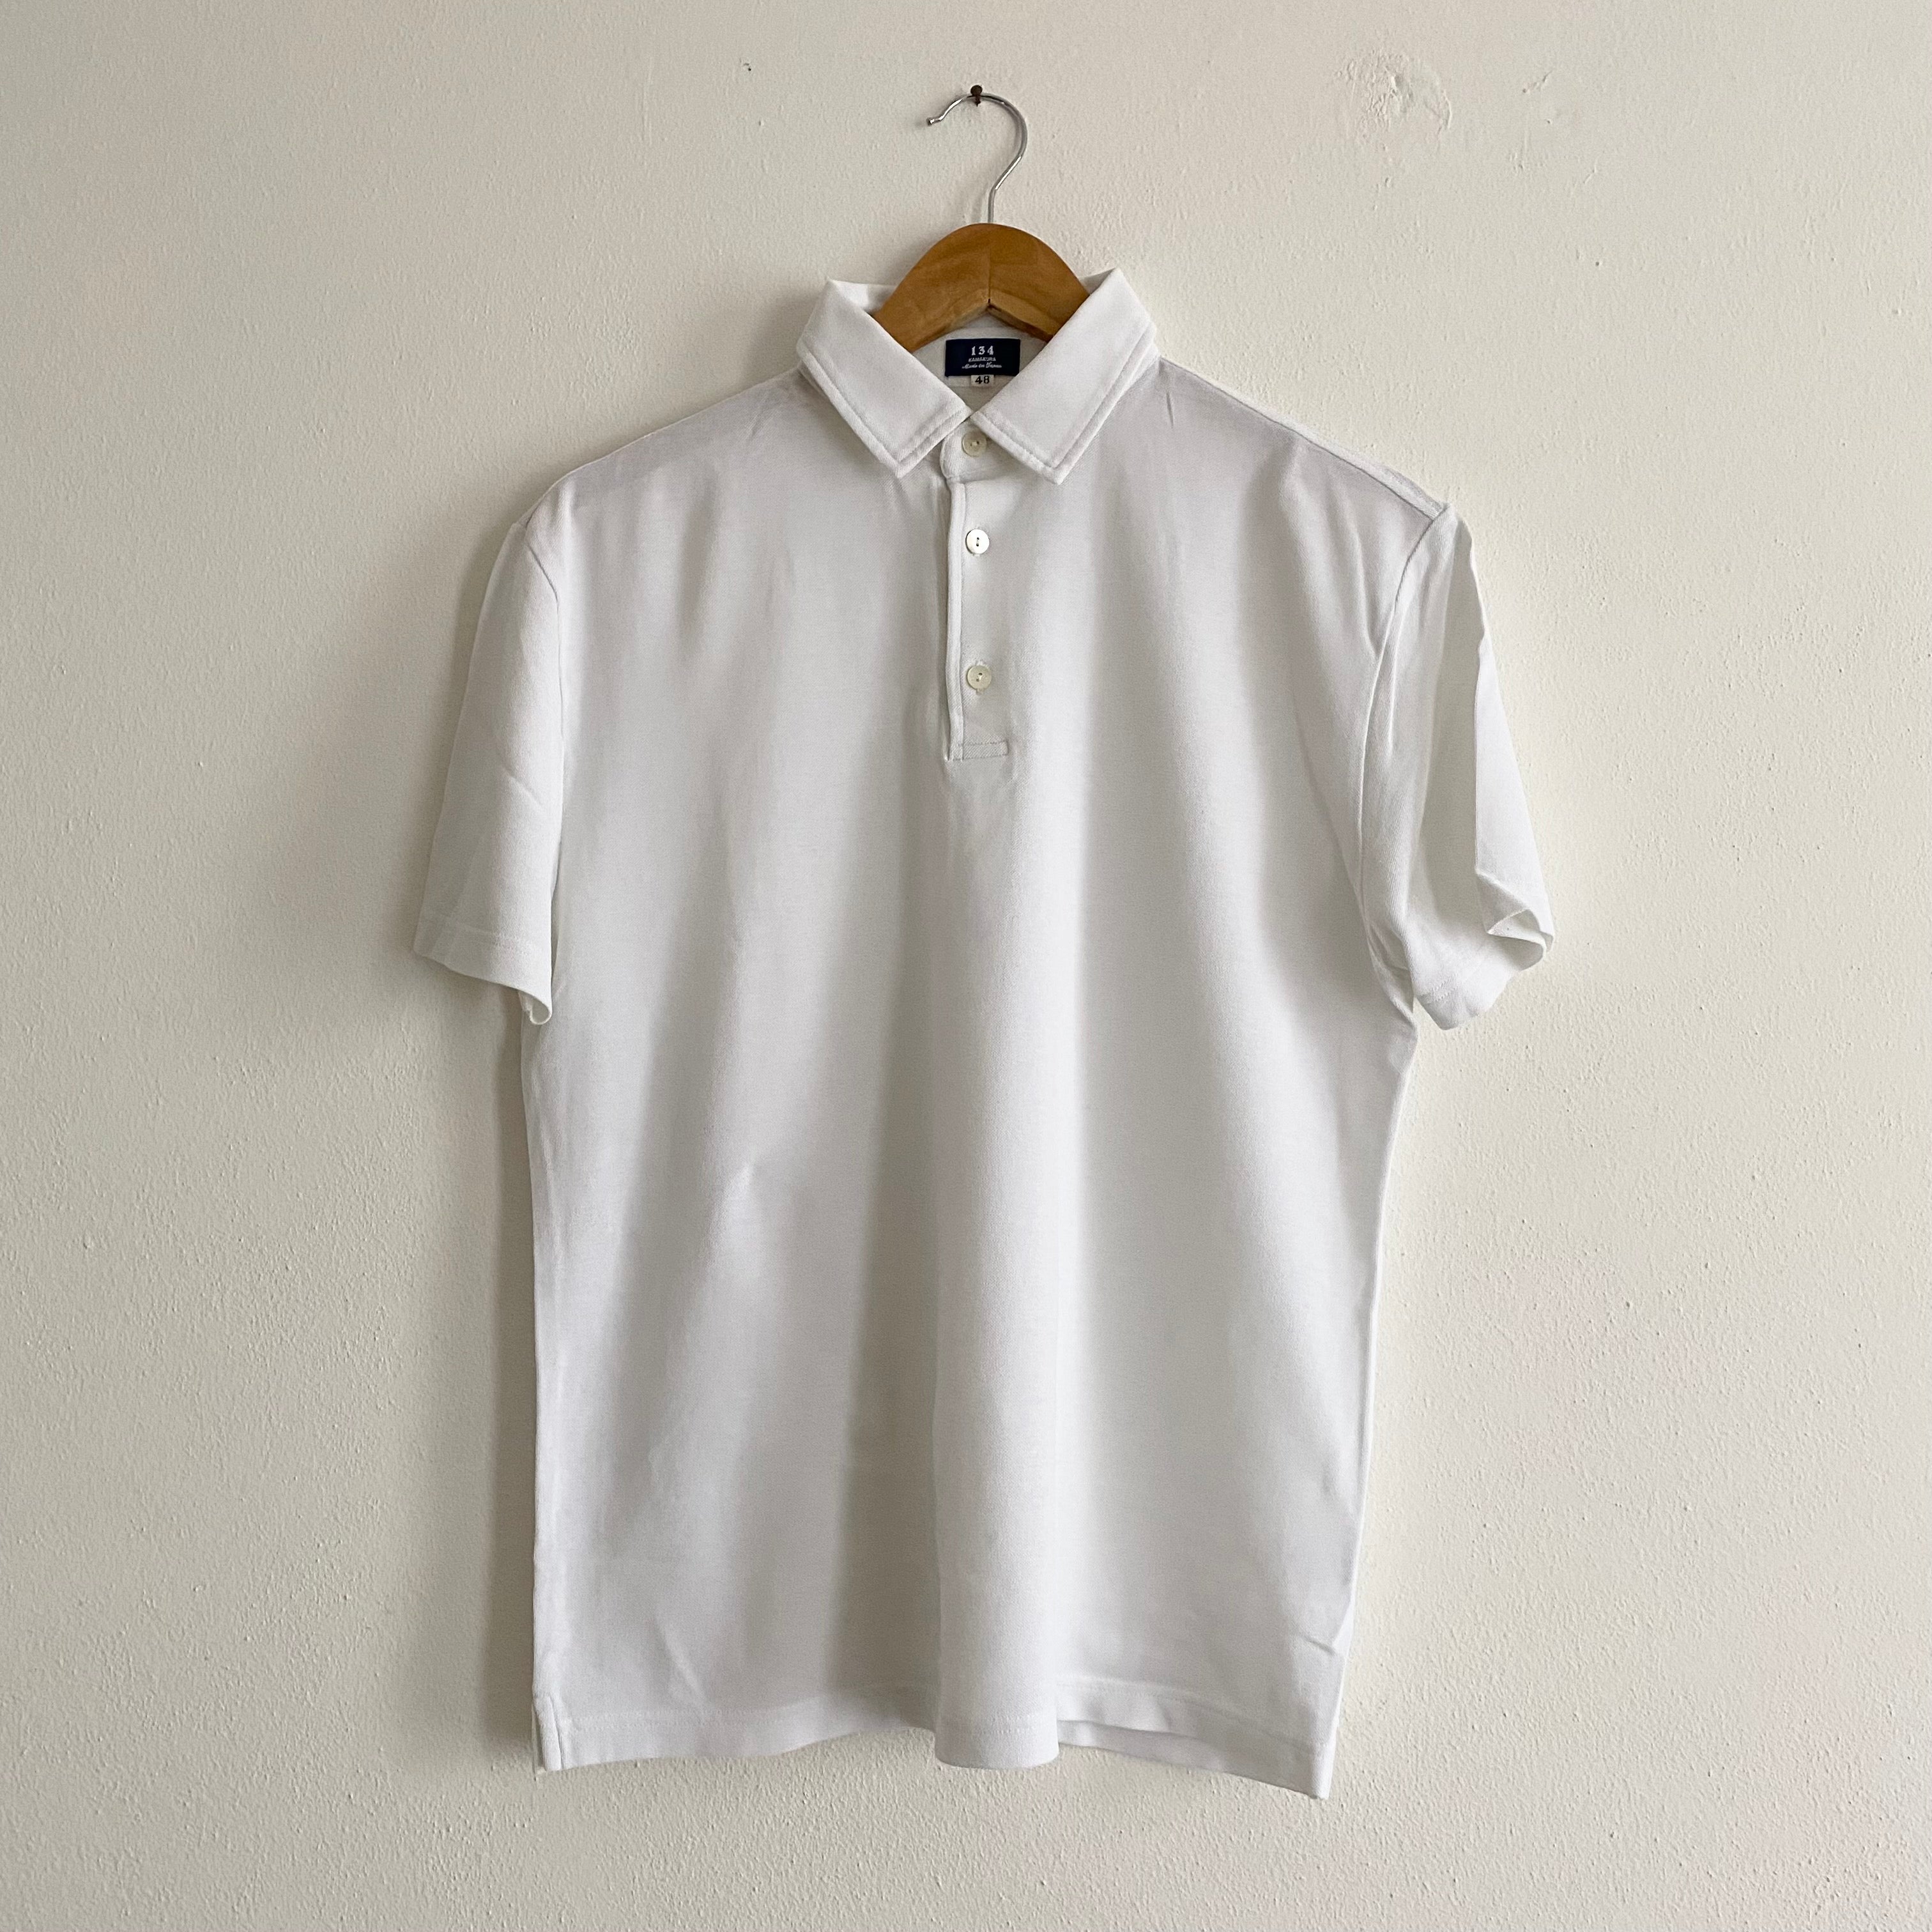 White Polo Shirt - 48